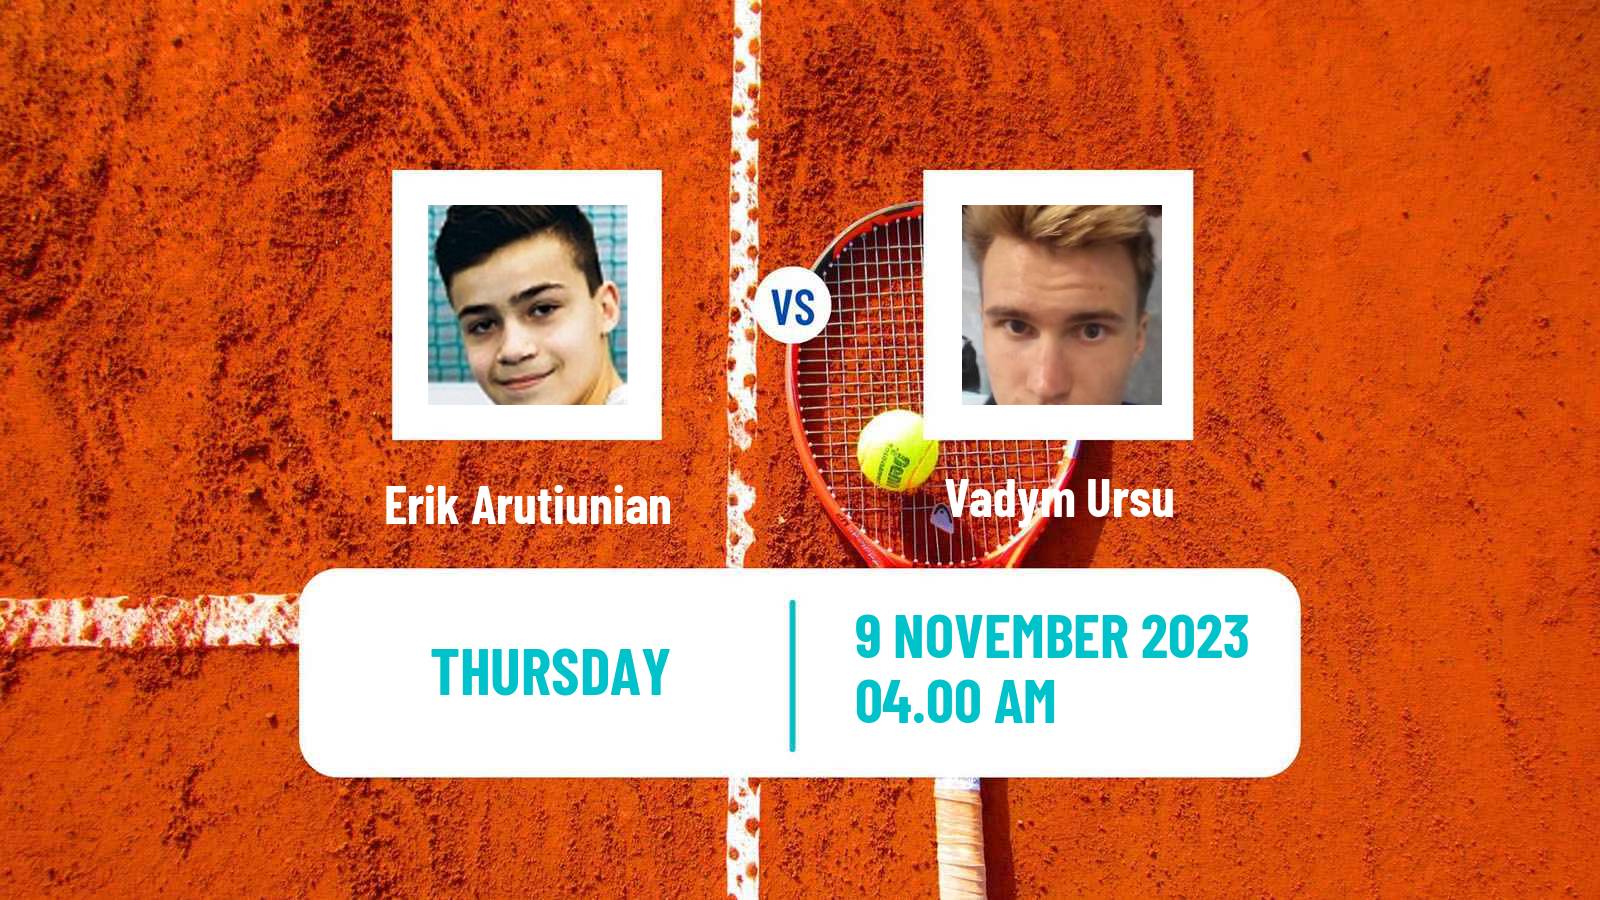 Tennis ITF M25 Sharm Elsheikh 5 Men Erik Arutiunian - Vadym Ursu